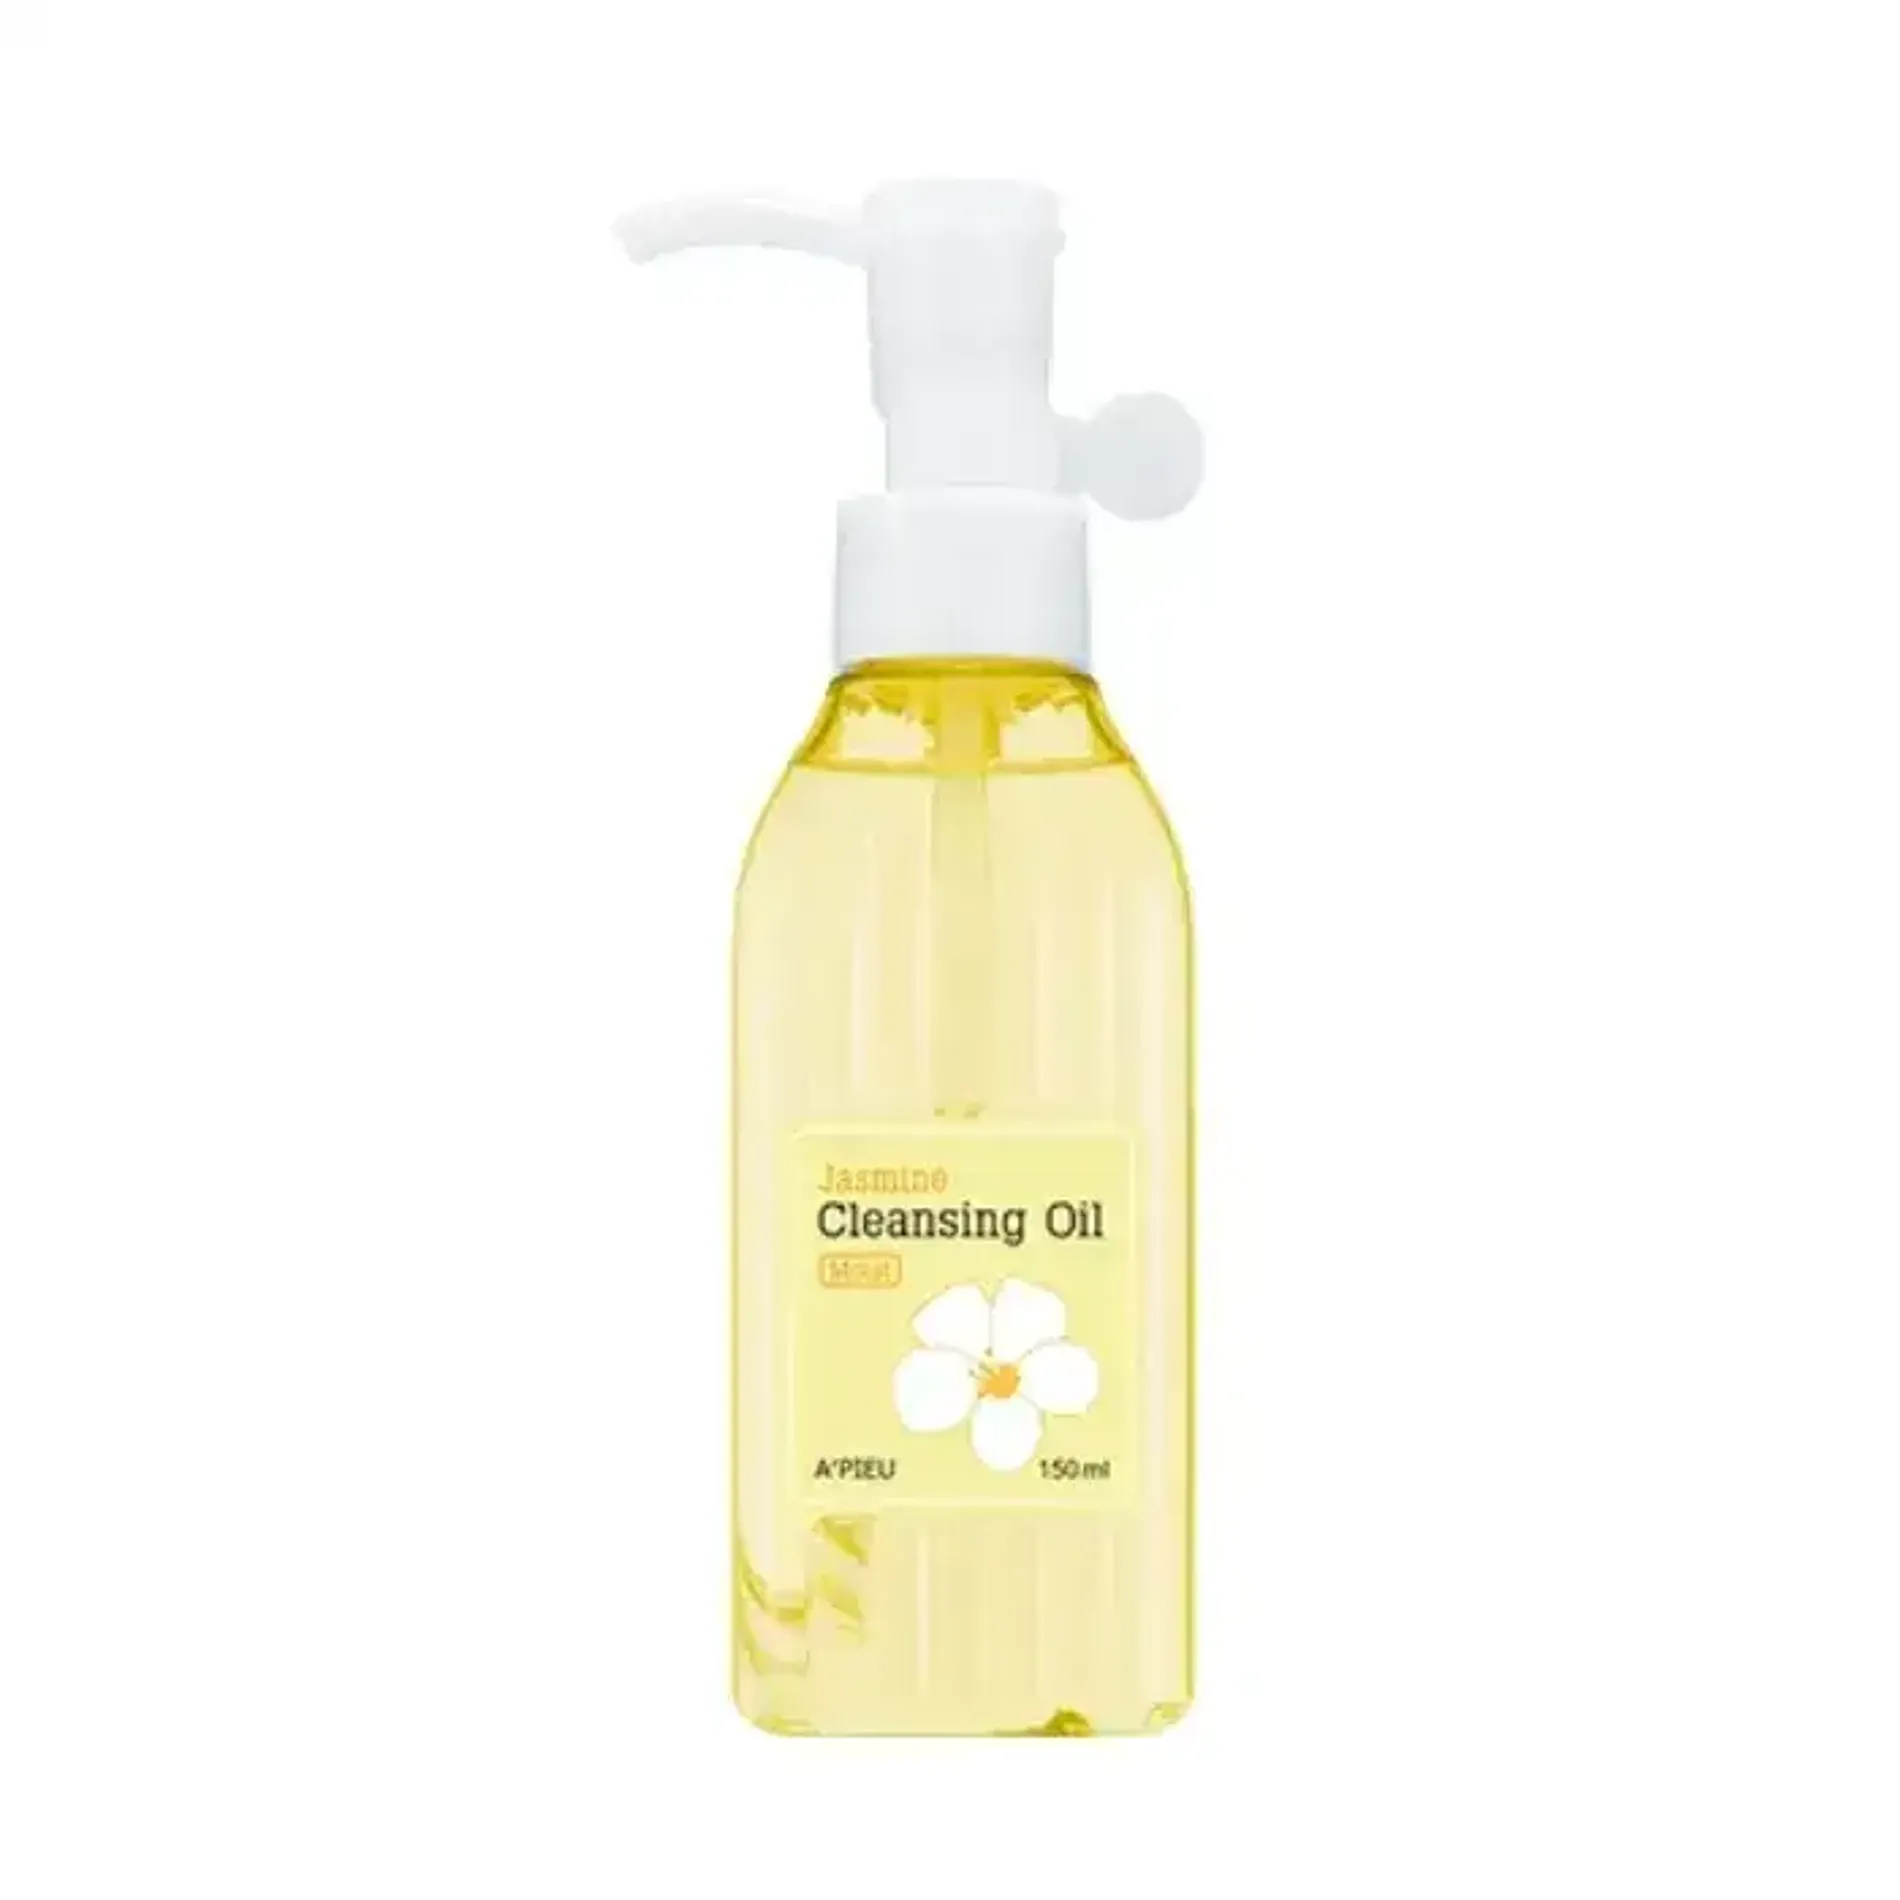 dau-tay-trang-a-pieu-jasmine-cleansing-oil-moist-150ml-1